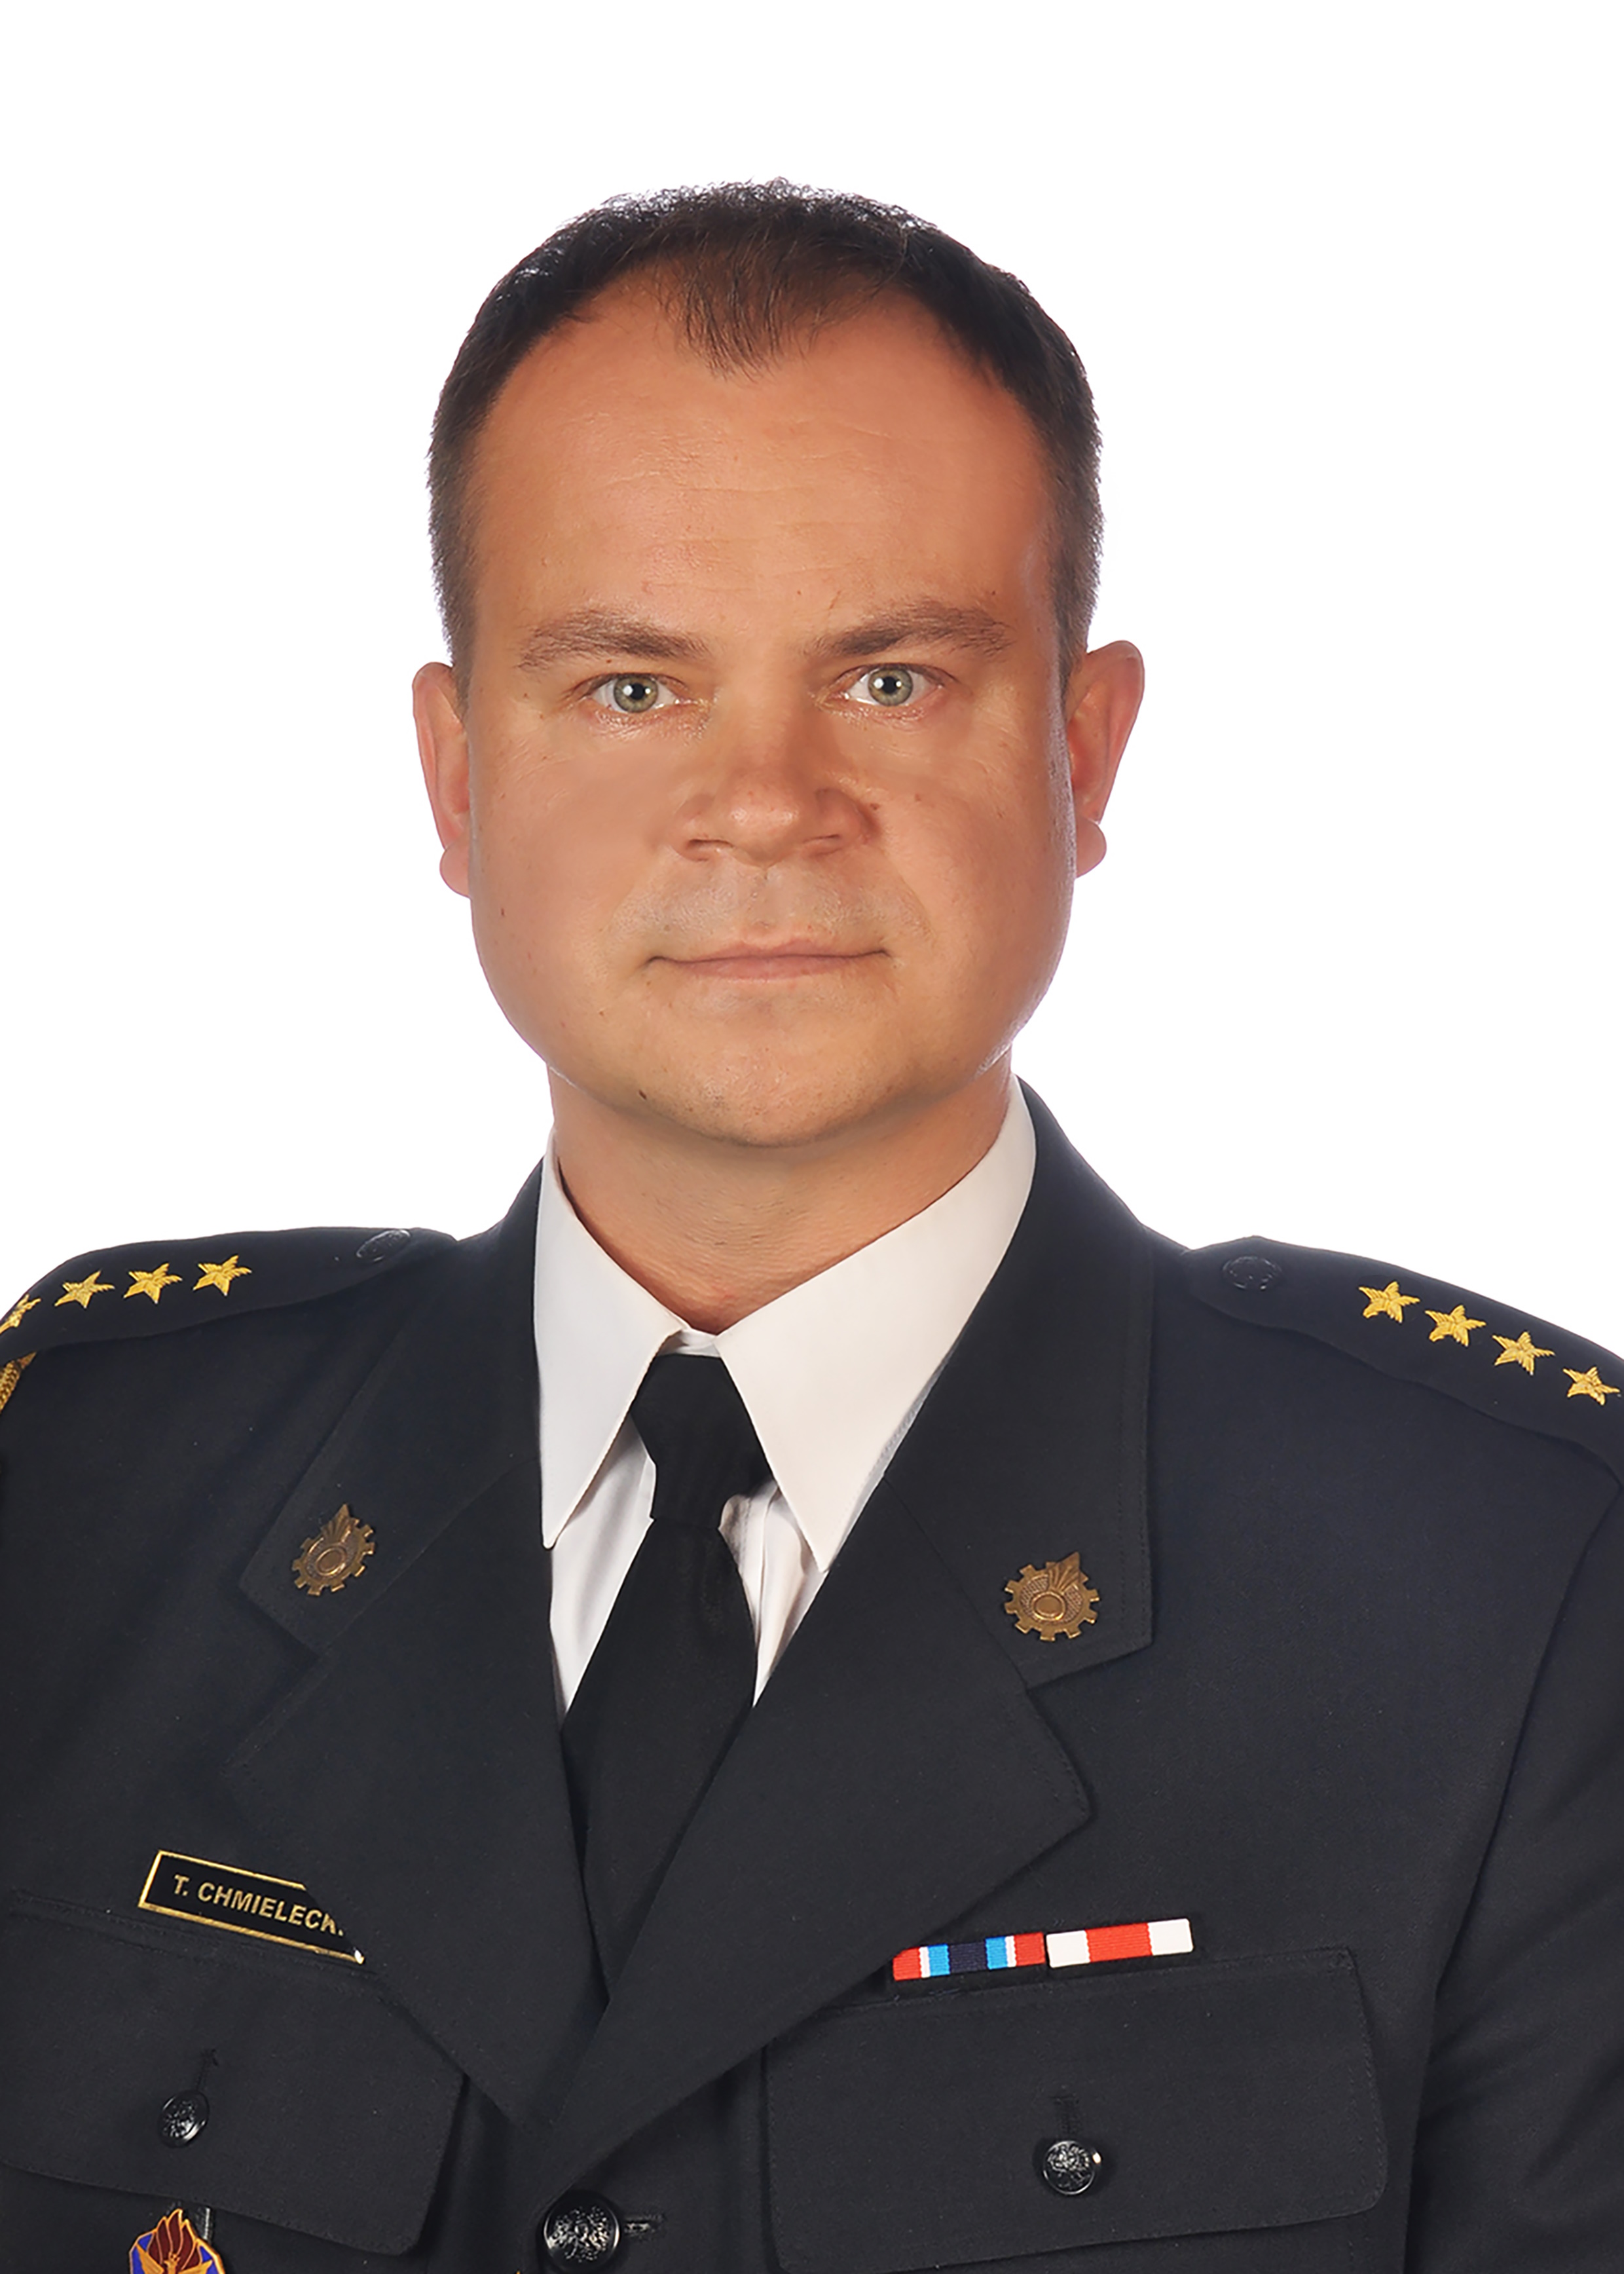 kpt. Tomasz CHMIELECKI